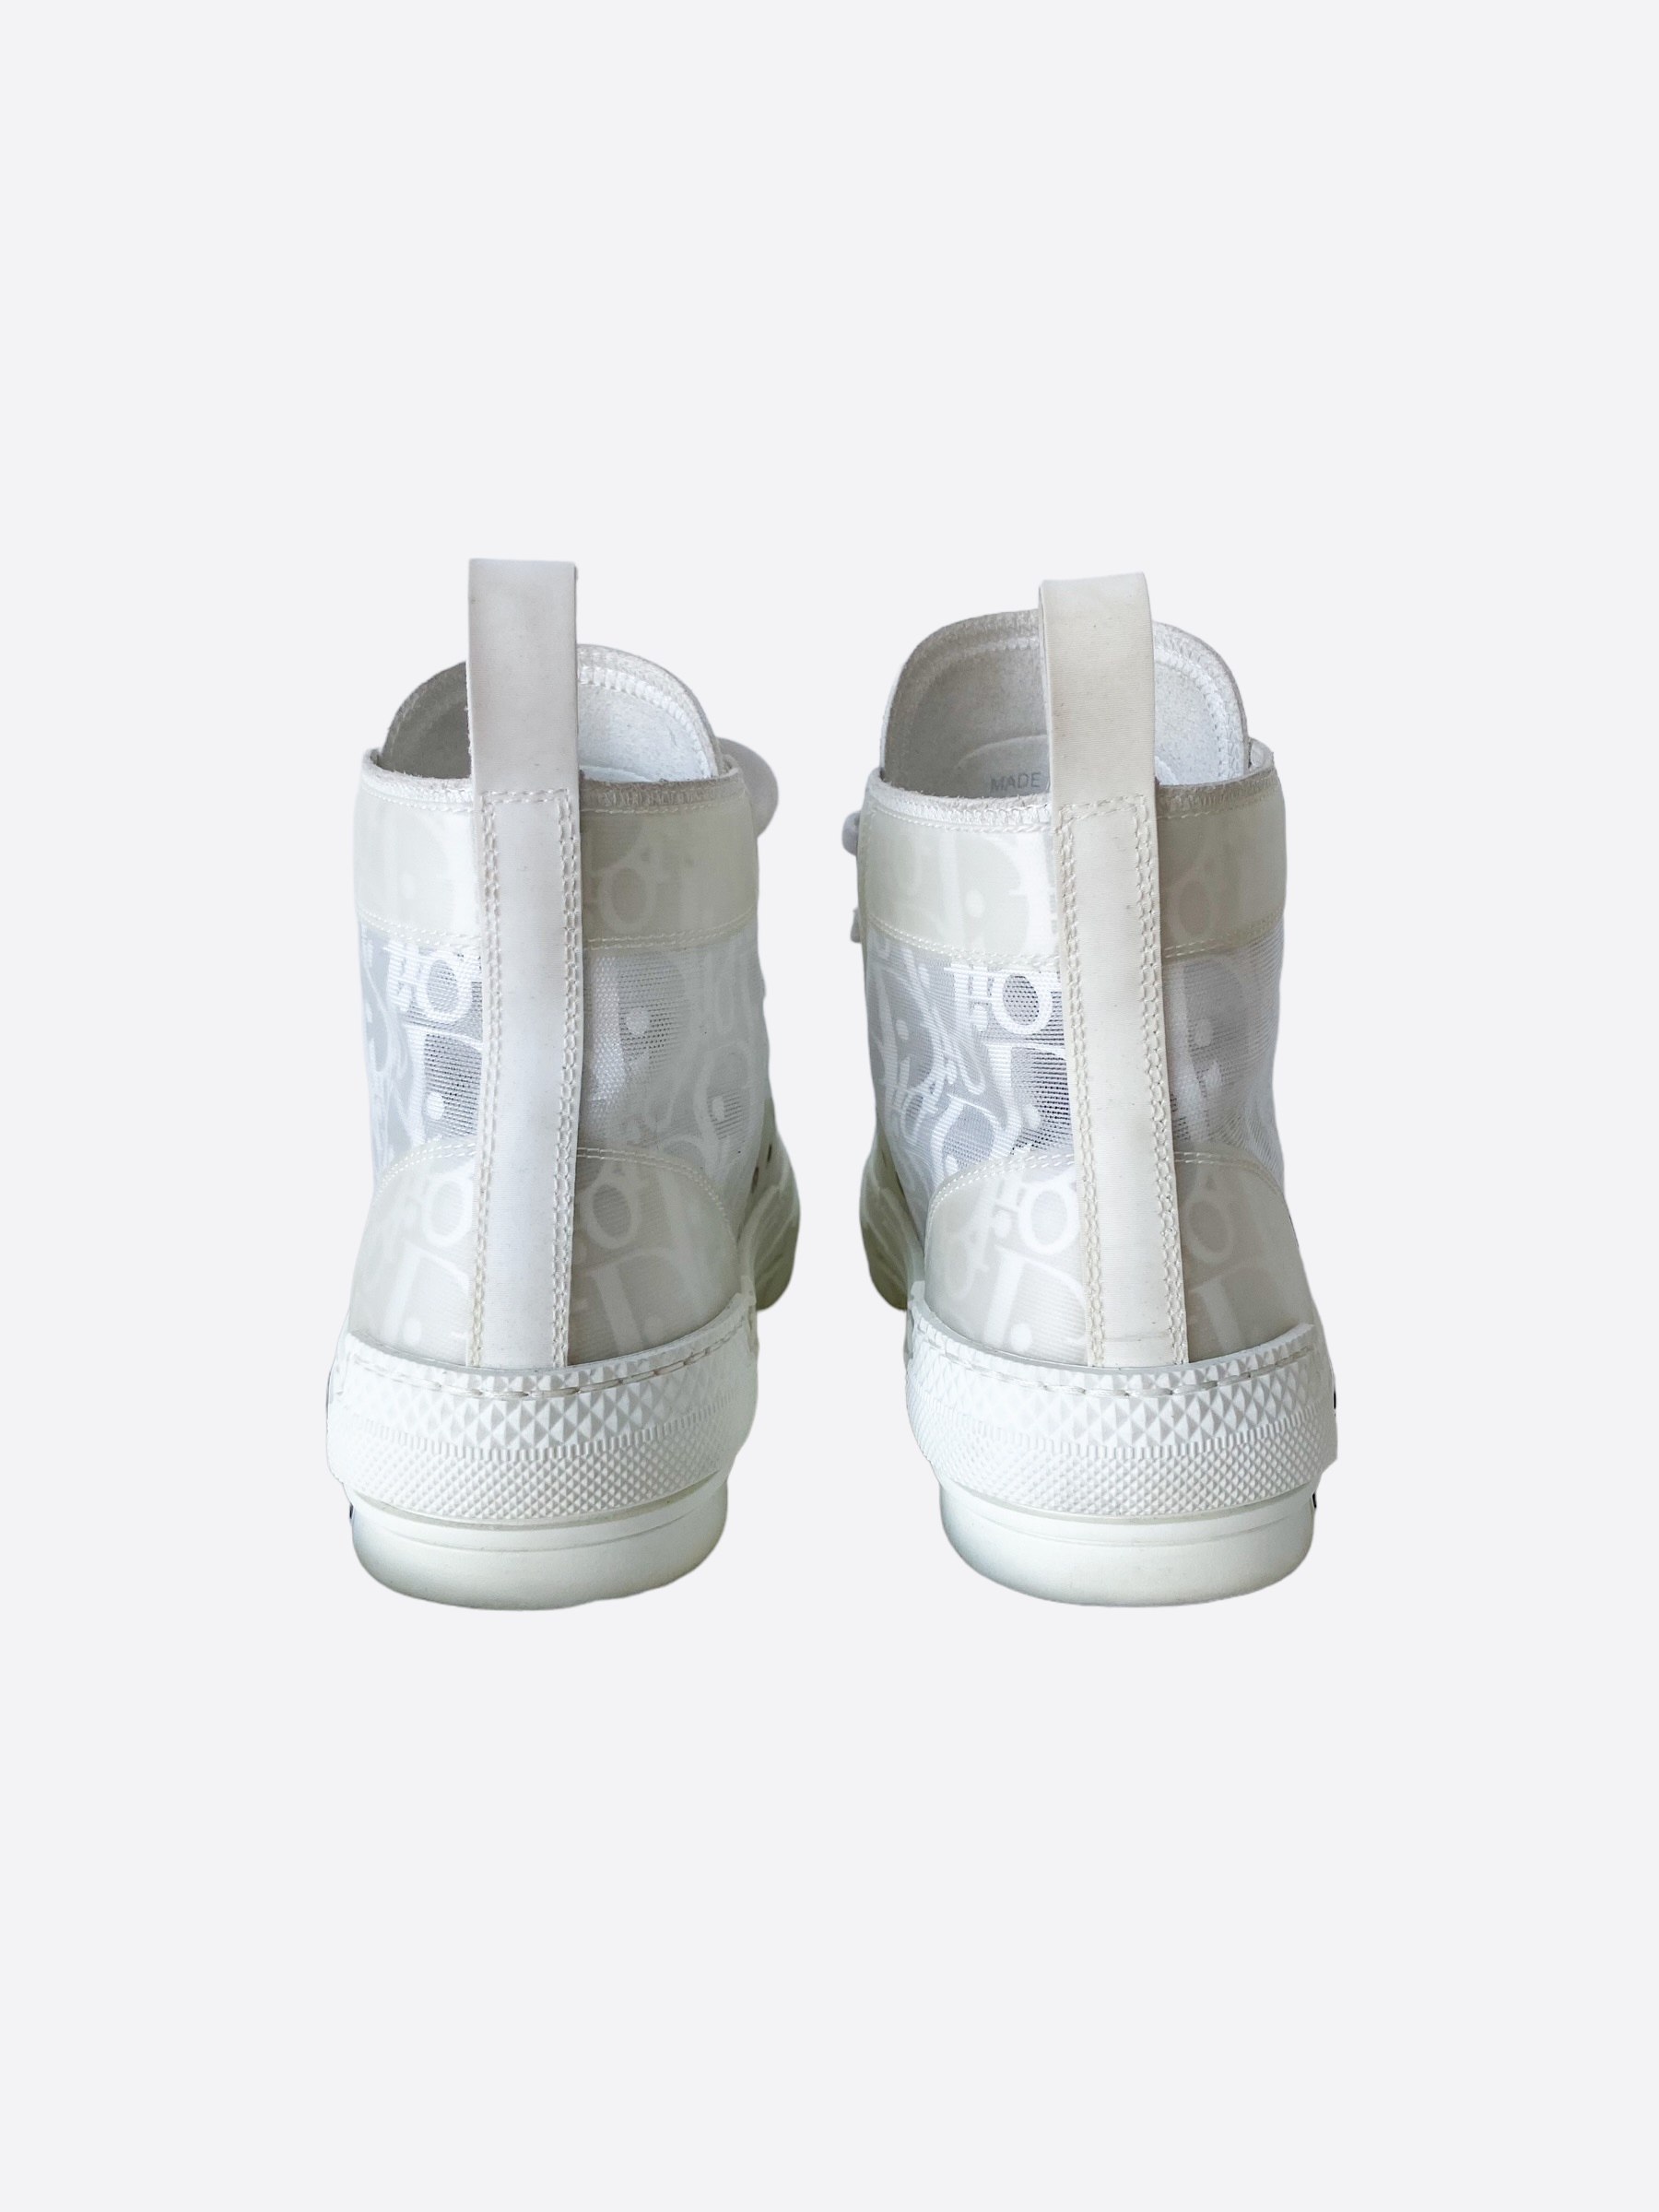 B23 High-Top Sneaker White Dior Oblique Canvas